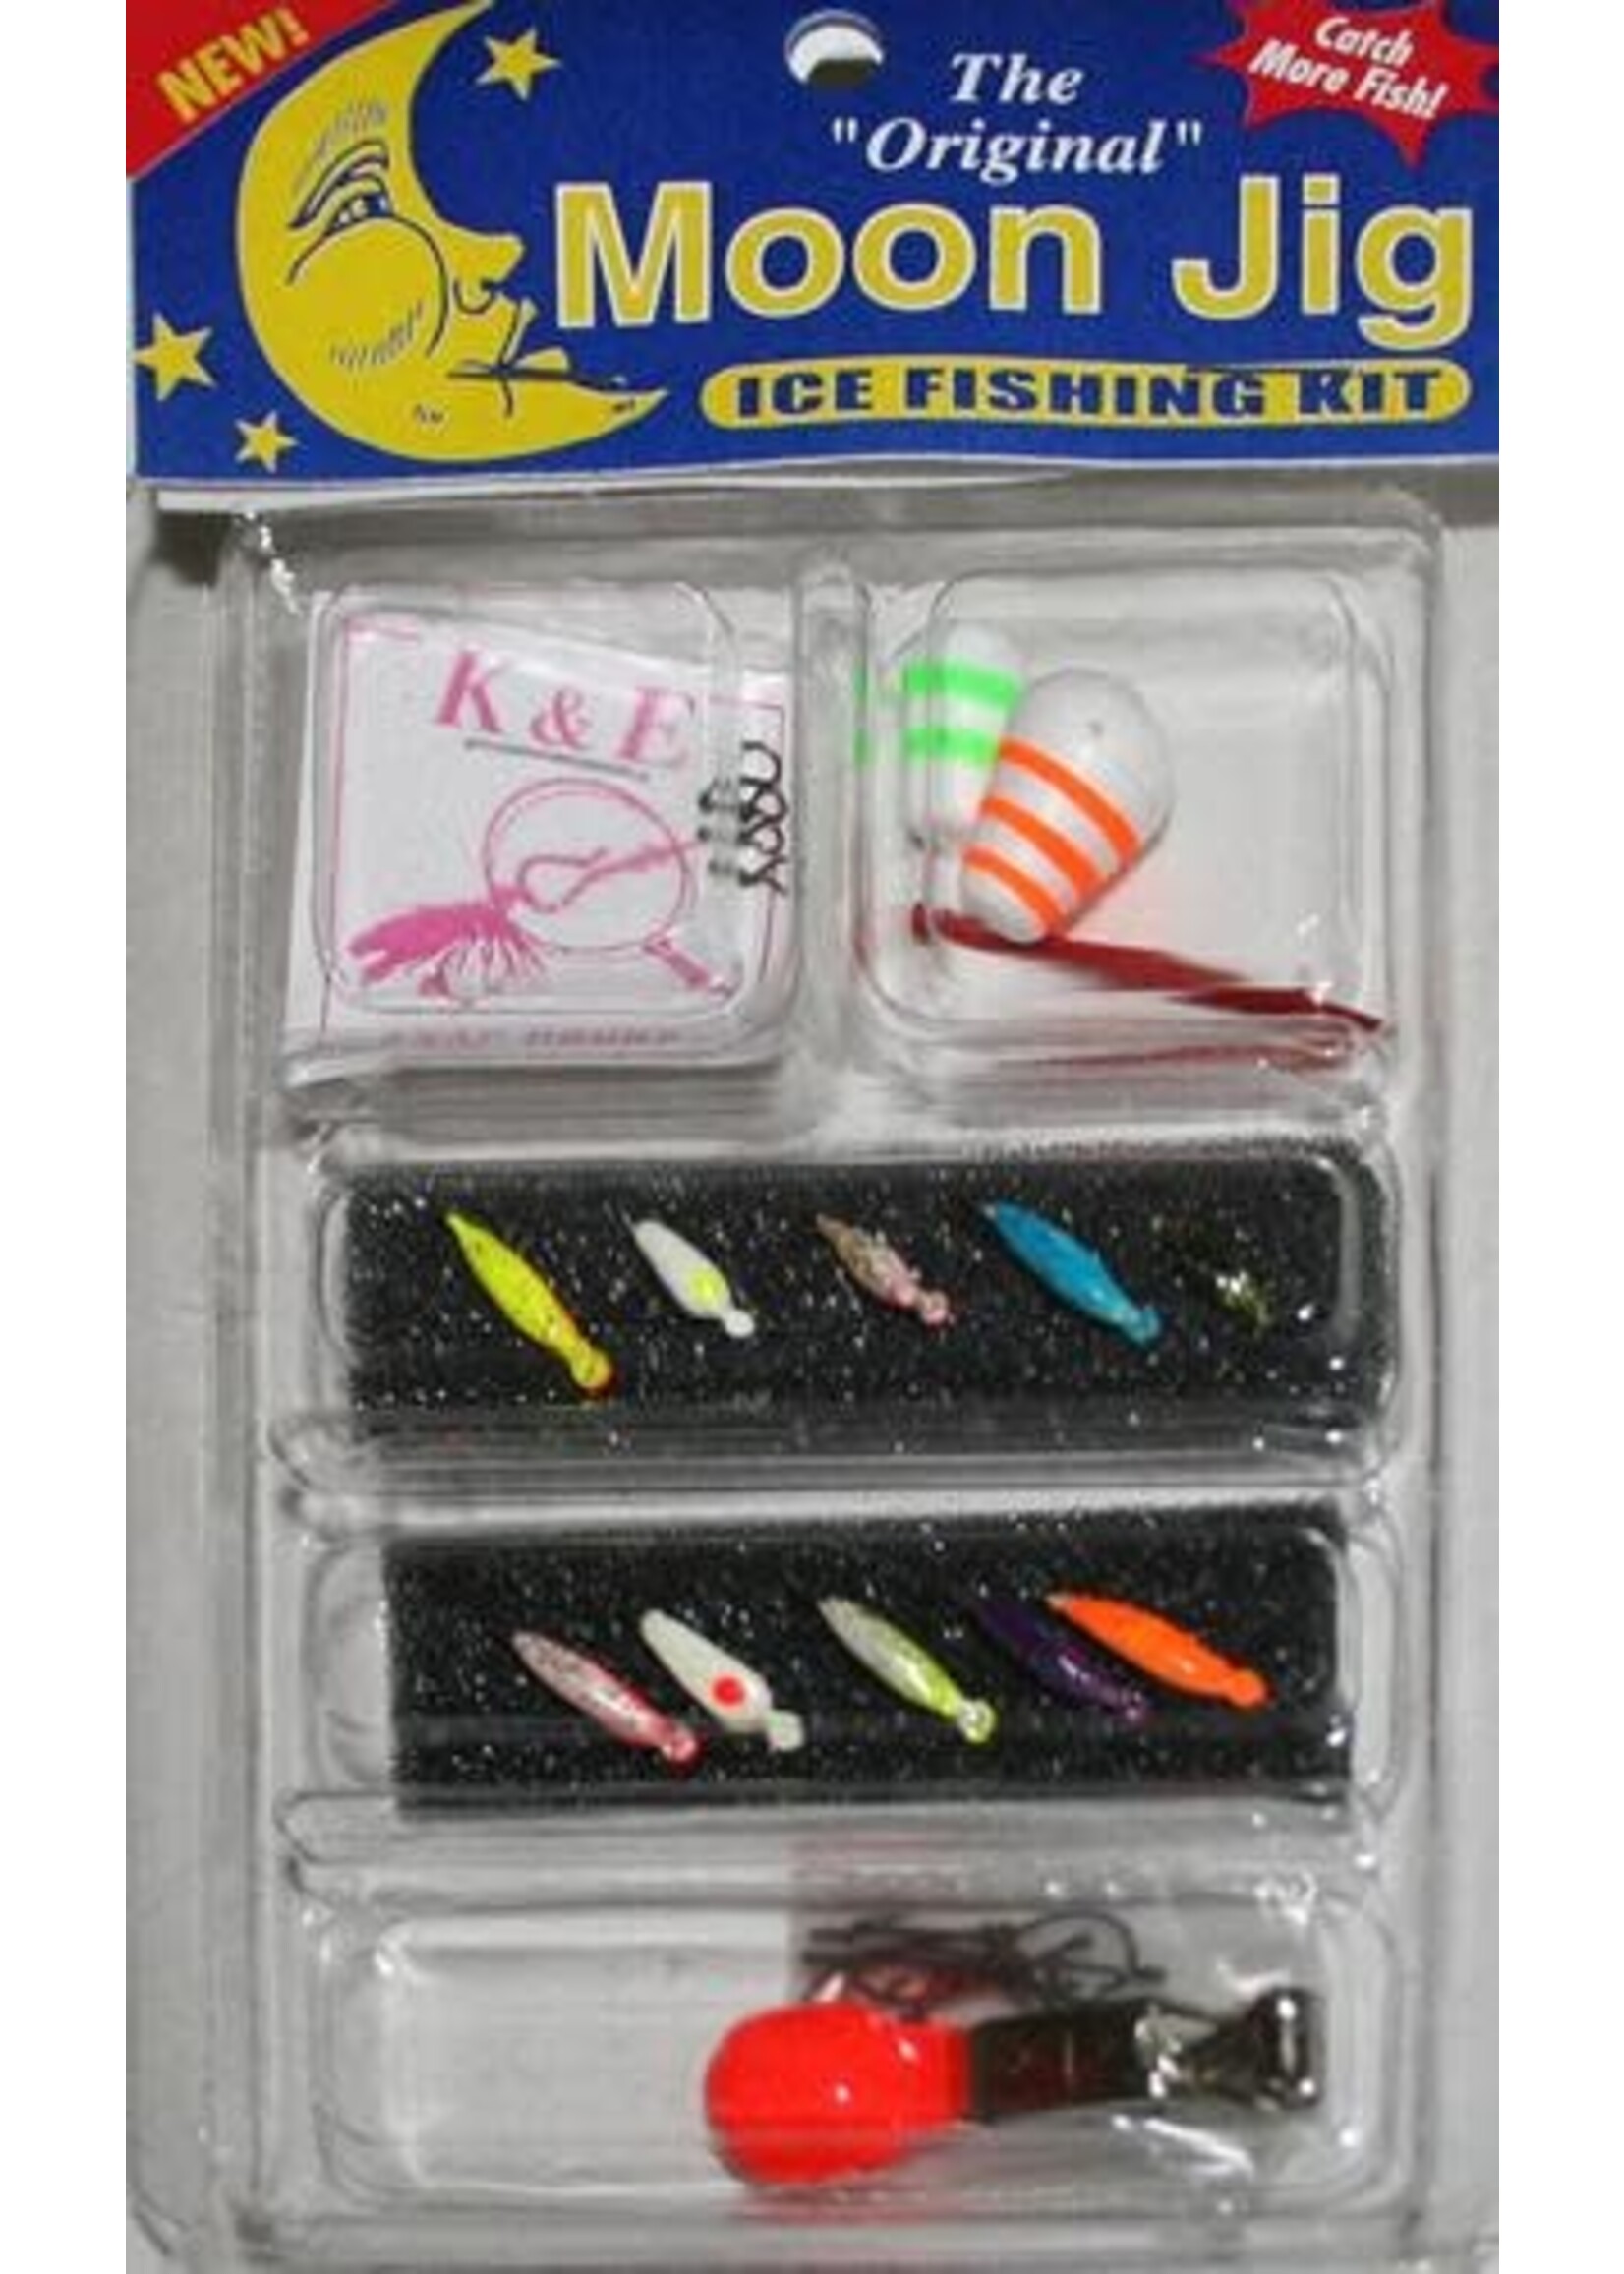 K&E Tackle Moon Jig Ice Fishing Kit - Tackle Shack